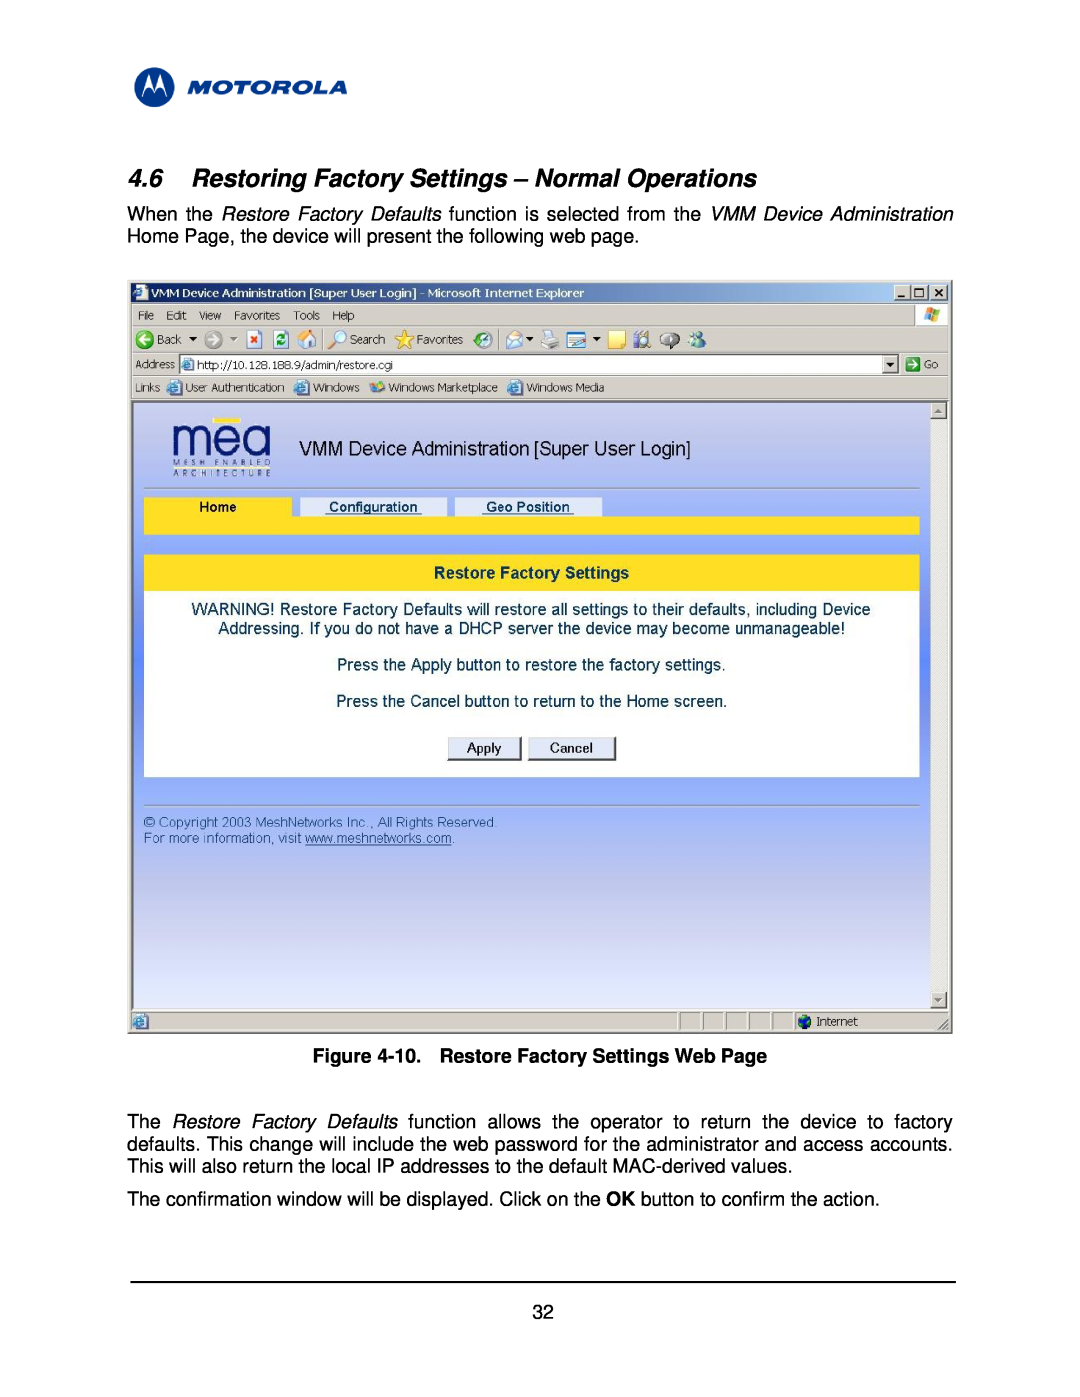 Motorola 3.1 manual Restoring Factory Settings - Normal Operations, 10. Restore Factory Settings Web Page 